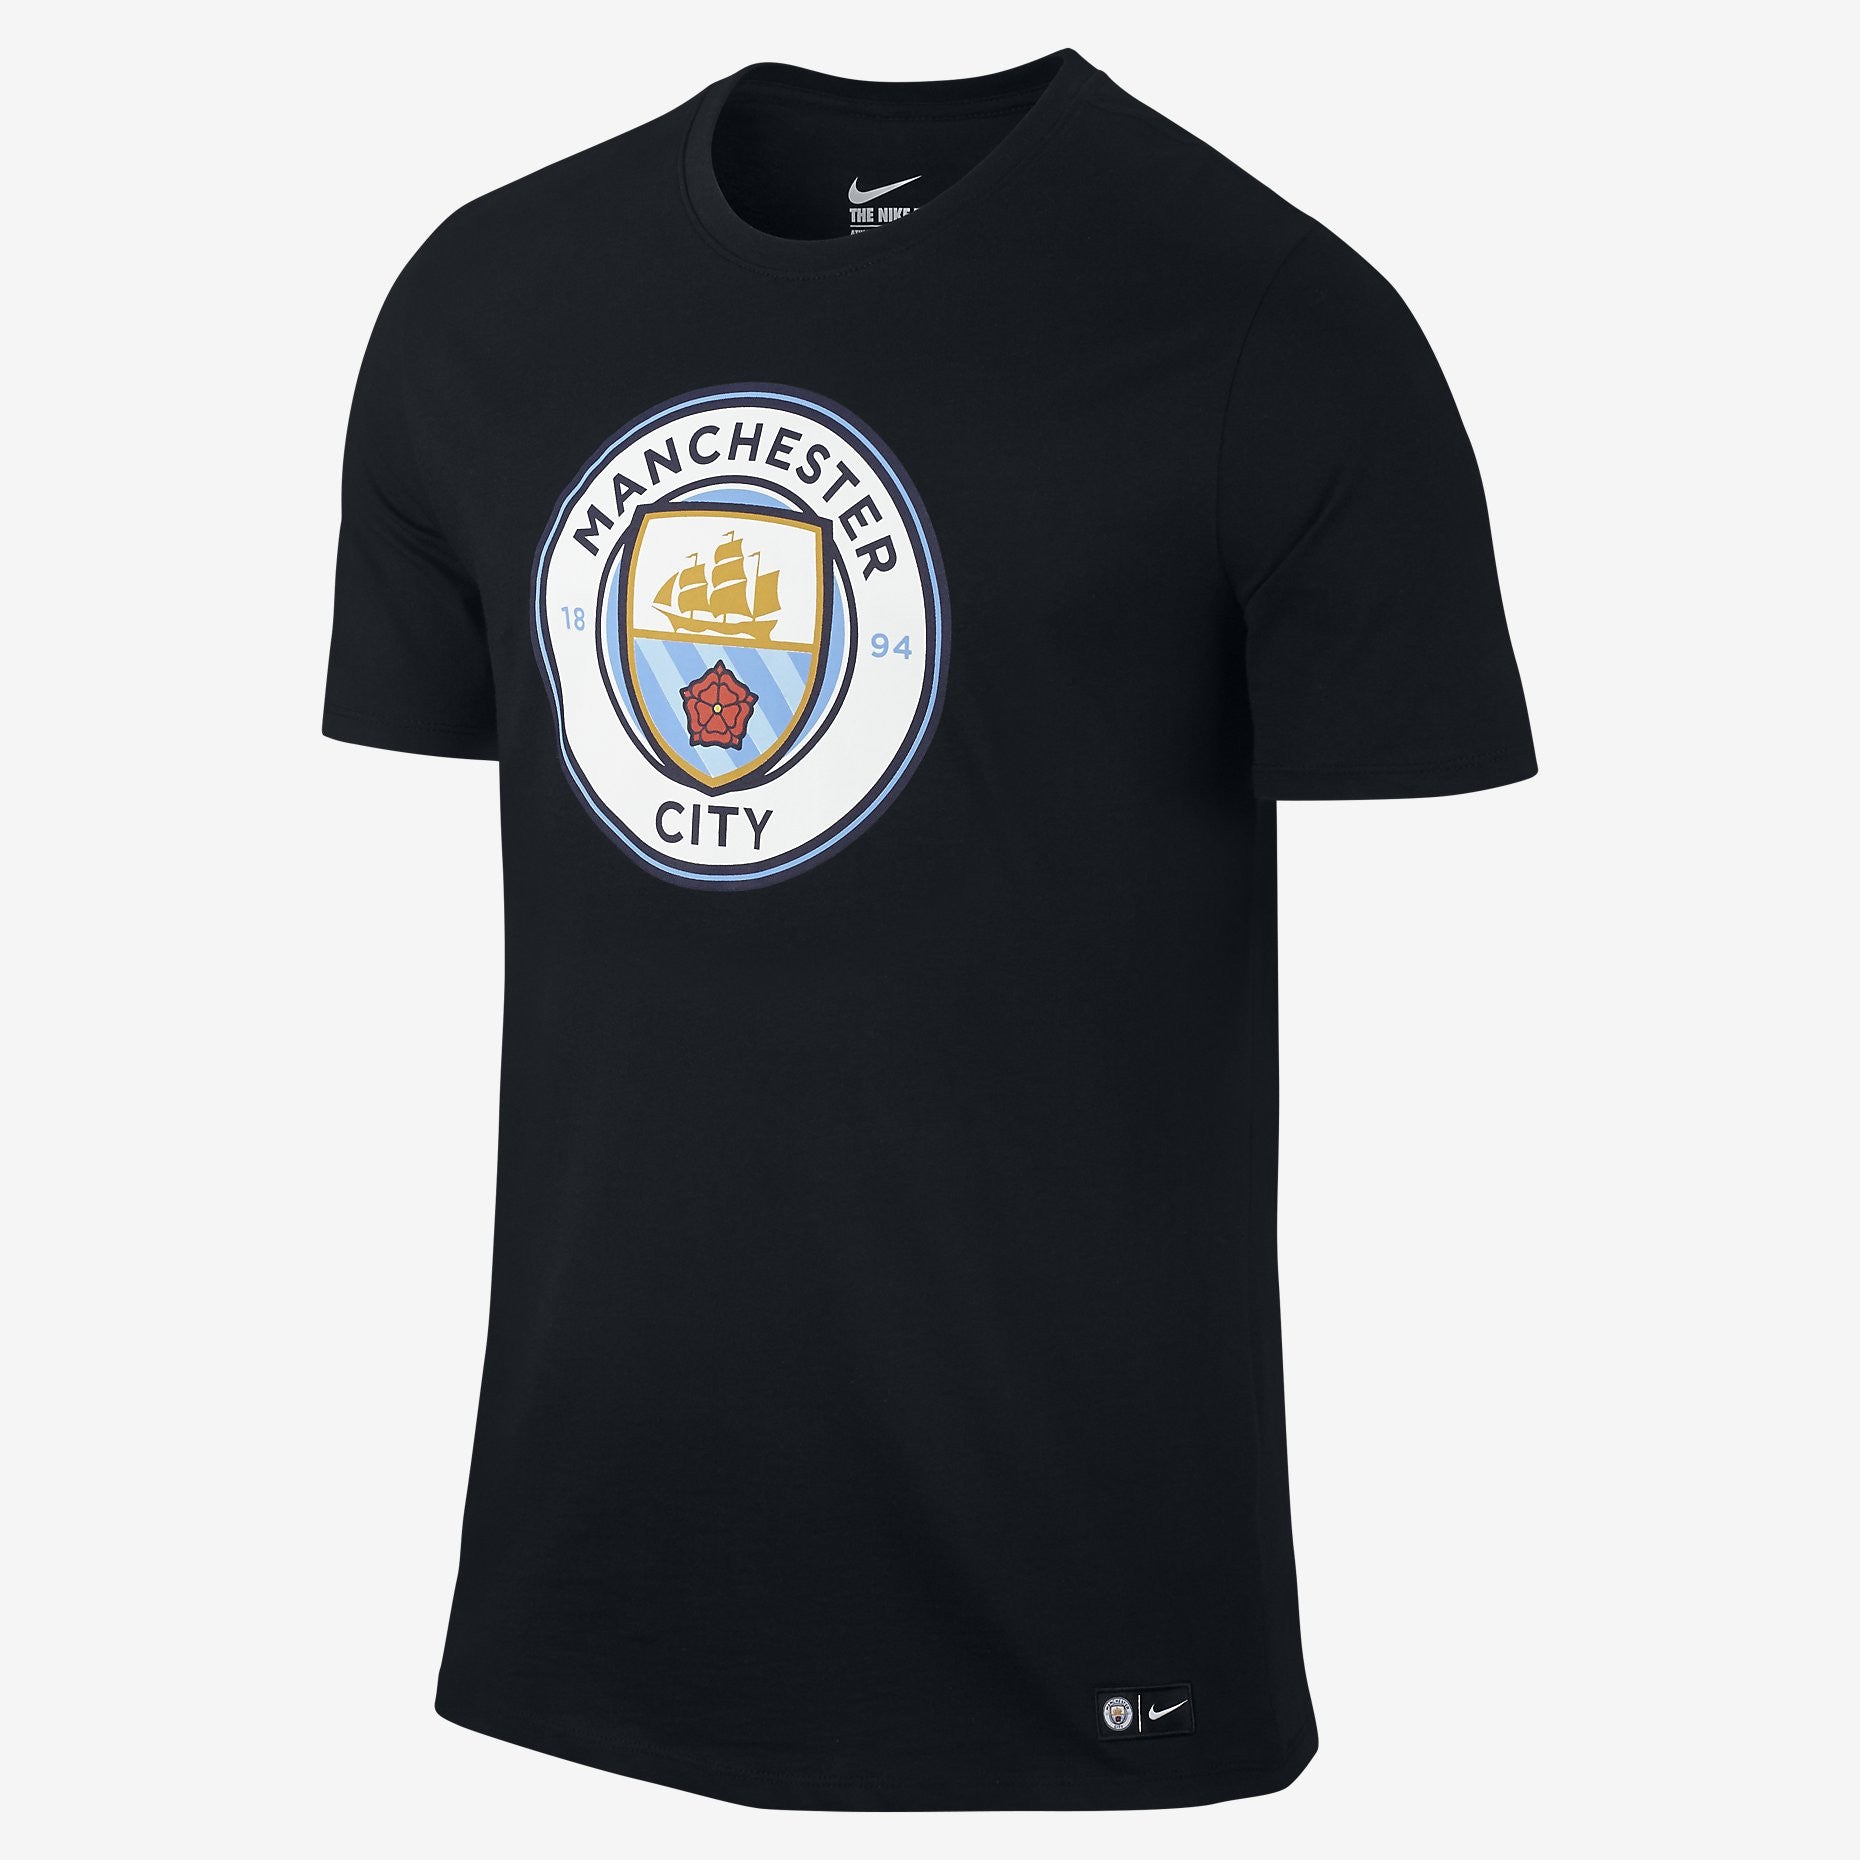 Nike Men's Manchester City FC Crest T-Shirt - La Liga Soccer